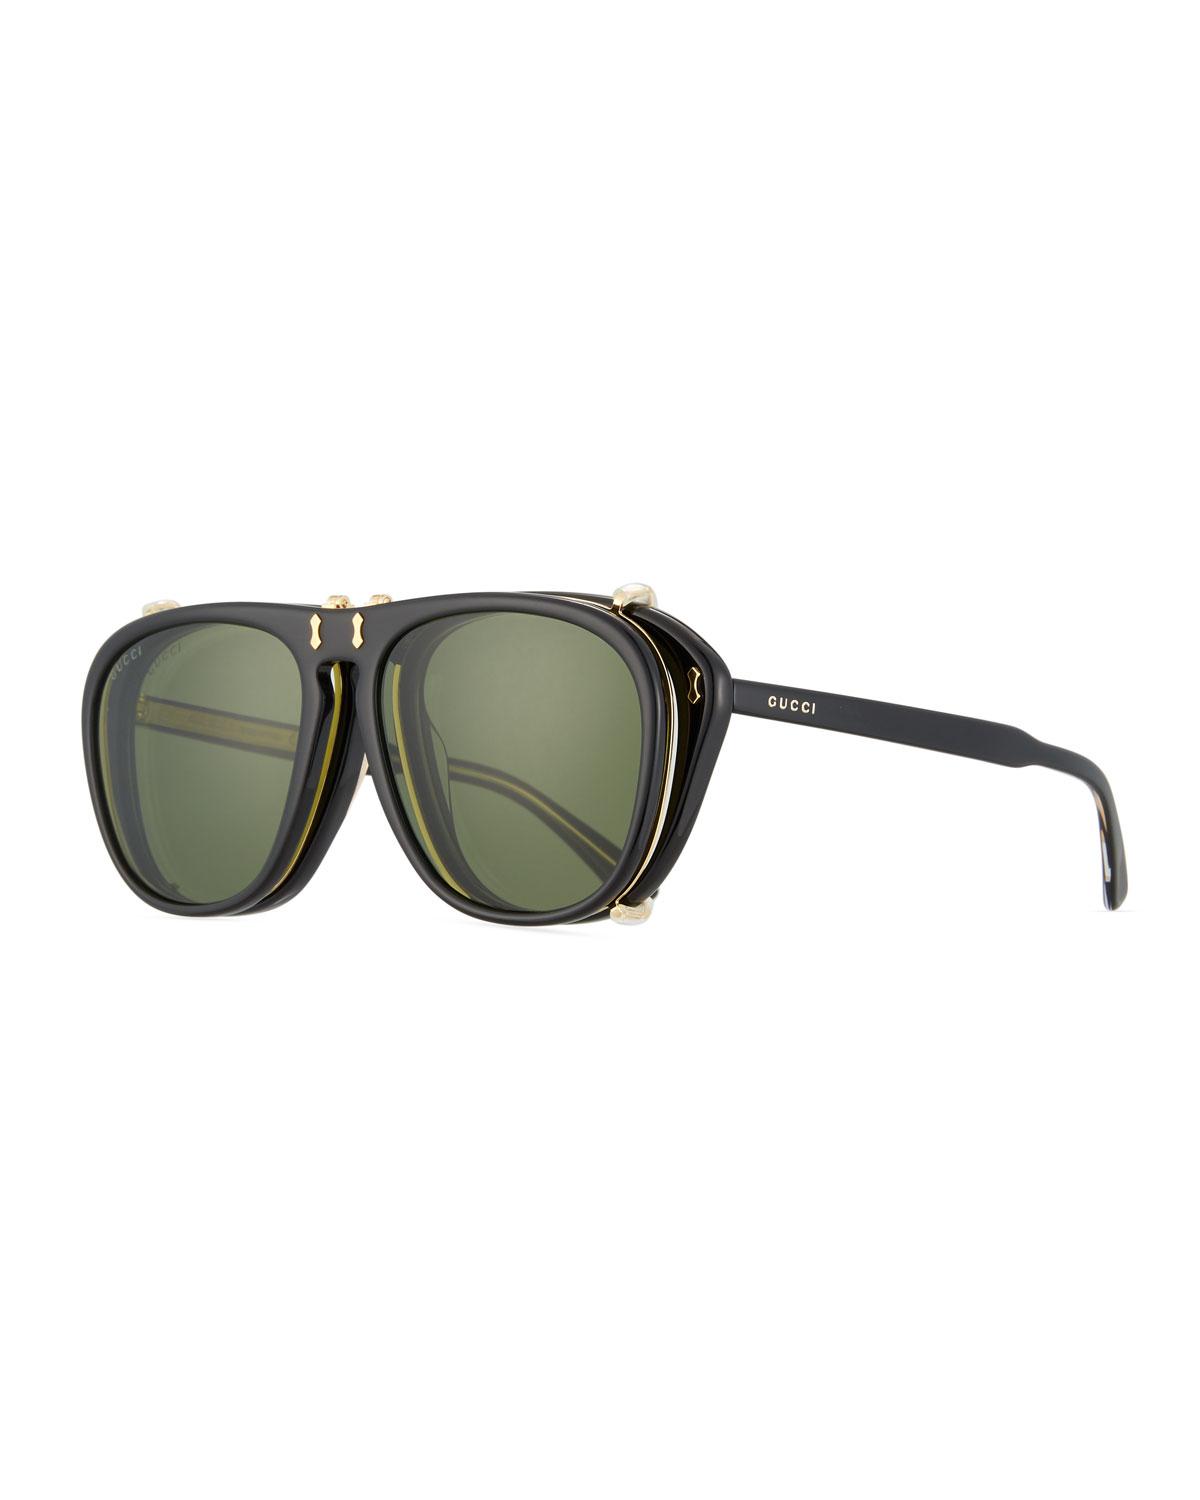 Lyst Gucci Men S Acetate Aviator Optical Frames W Sunglasses In Black For Men